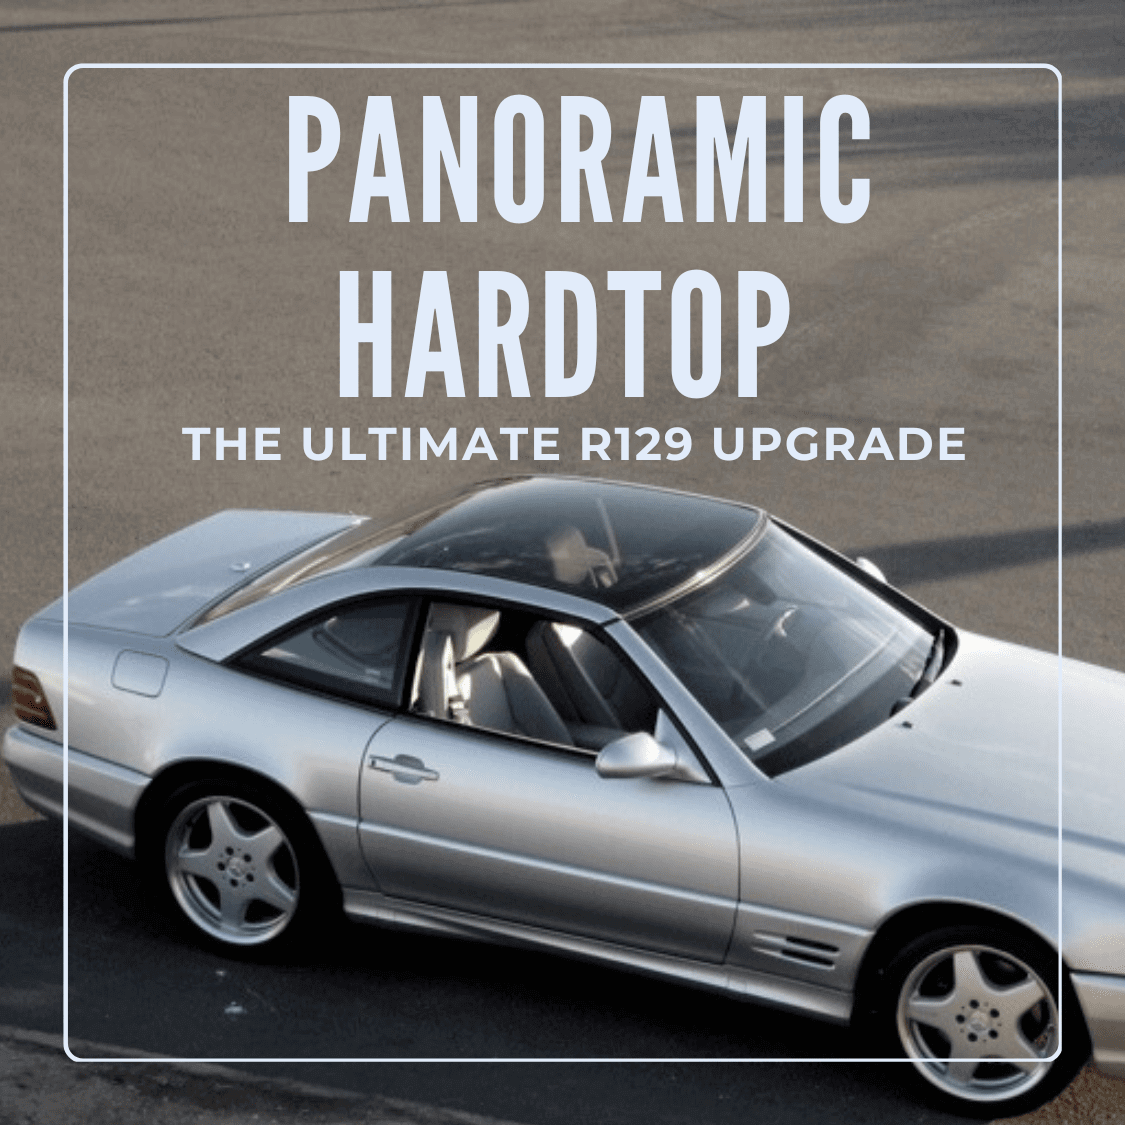 R129 Panoramic Hardtop: The Ultimate Winter Upgrade